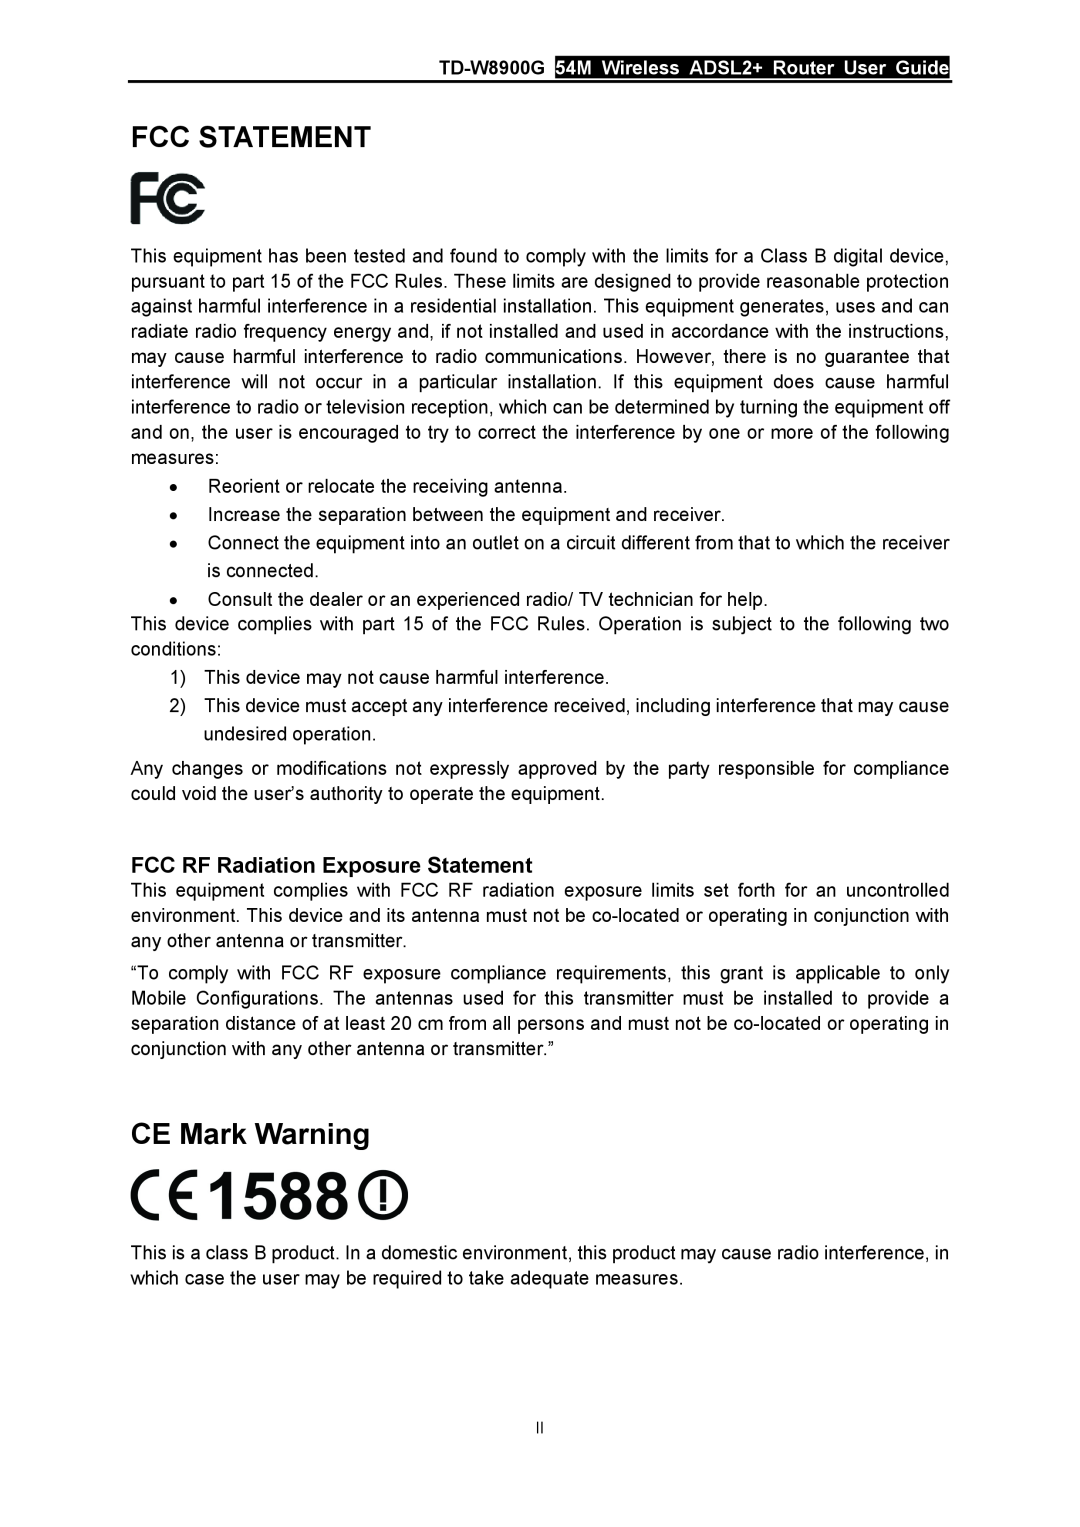 TP-Link TD-W8900G manual Fcc Statement, CE Mark Warning, FCC RF Radiation Exposure Statement 